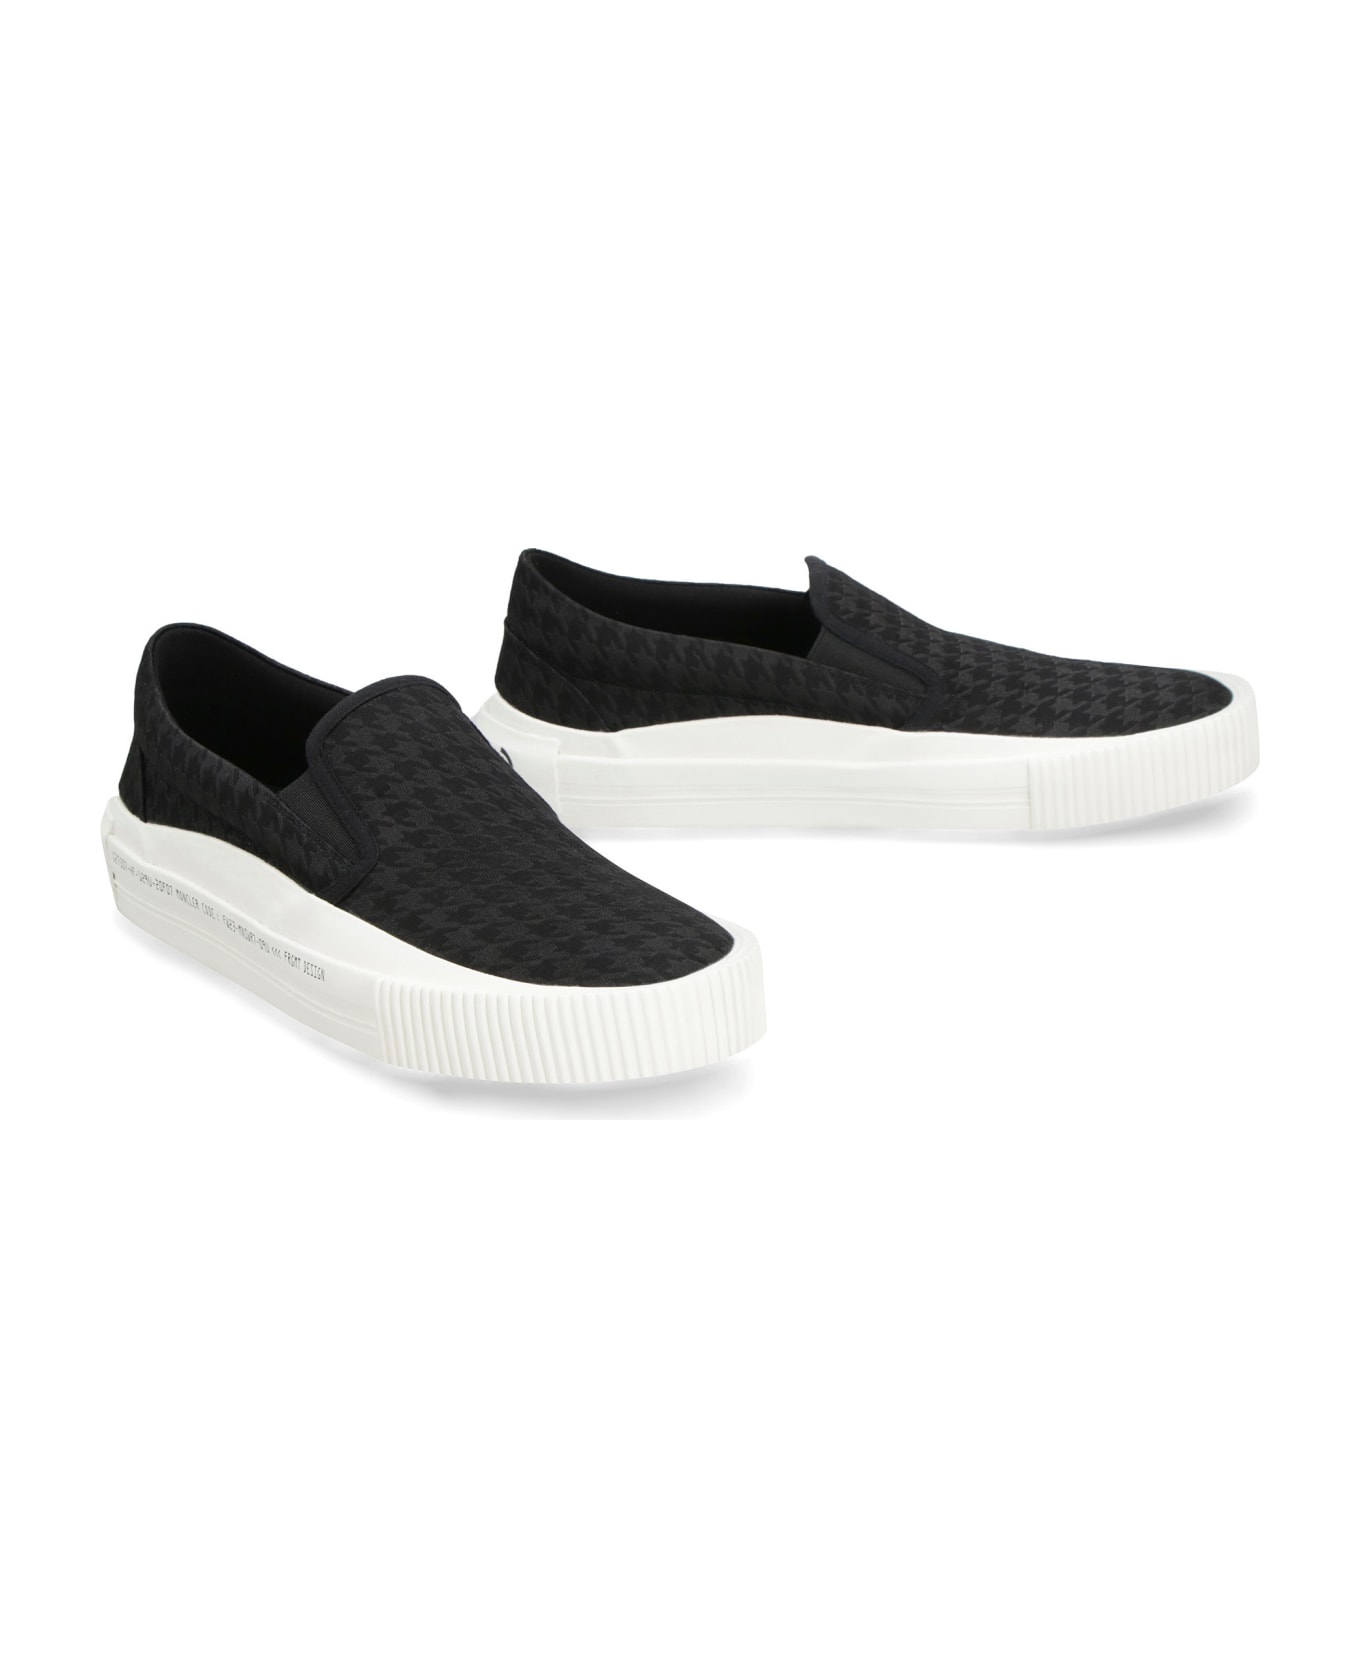 Moncler Genius Moncler X Frgmt - Vulcan Slip-on Sneakers - black